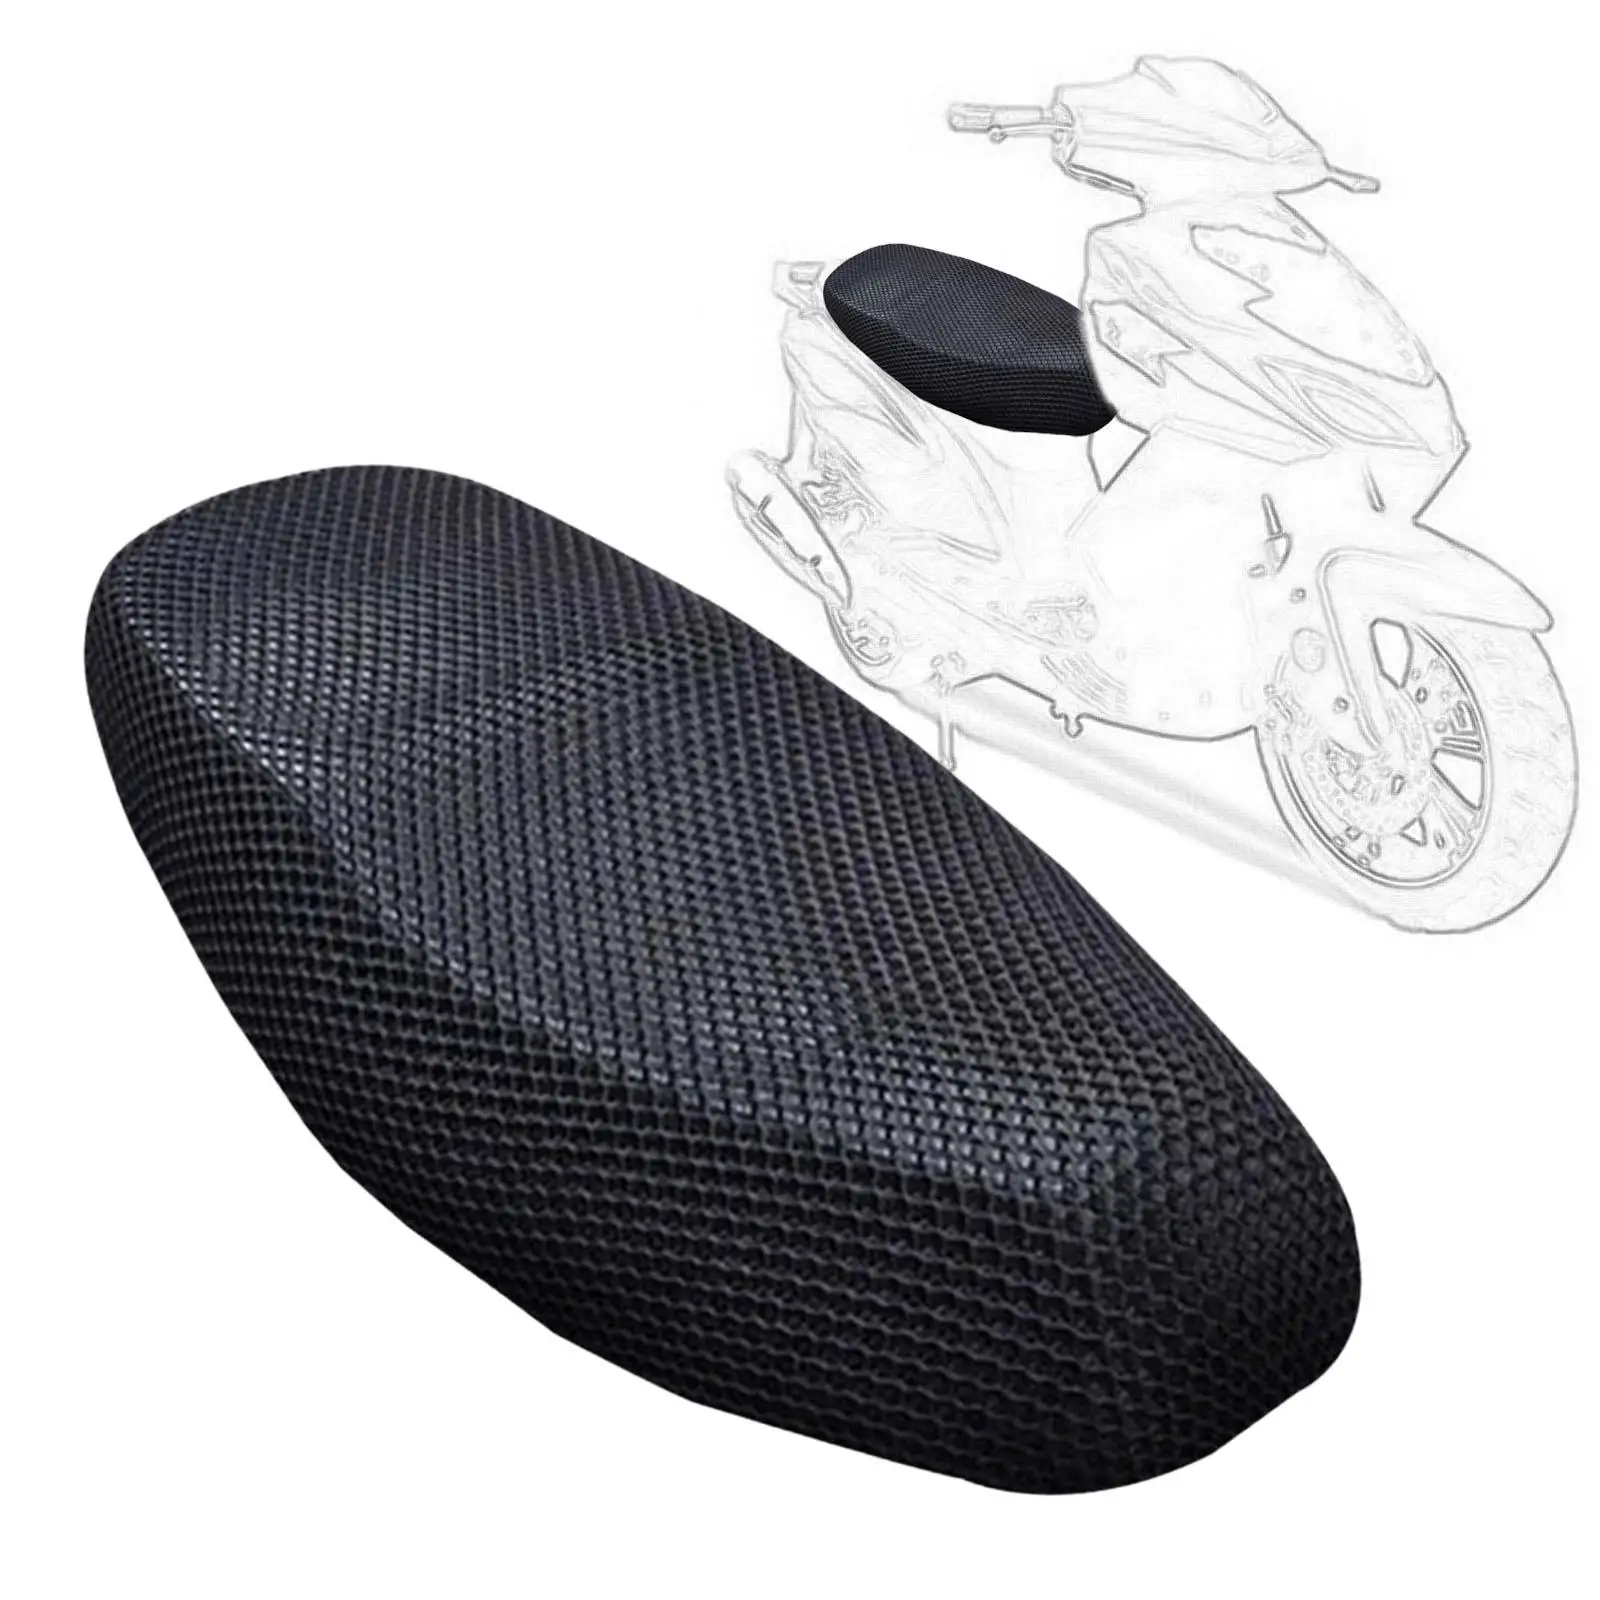 Motorcycle Seat Mesh Cover Comfort Anti Slip Heat Resistance Replace Universal